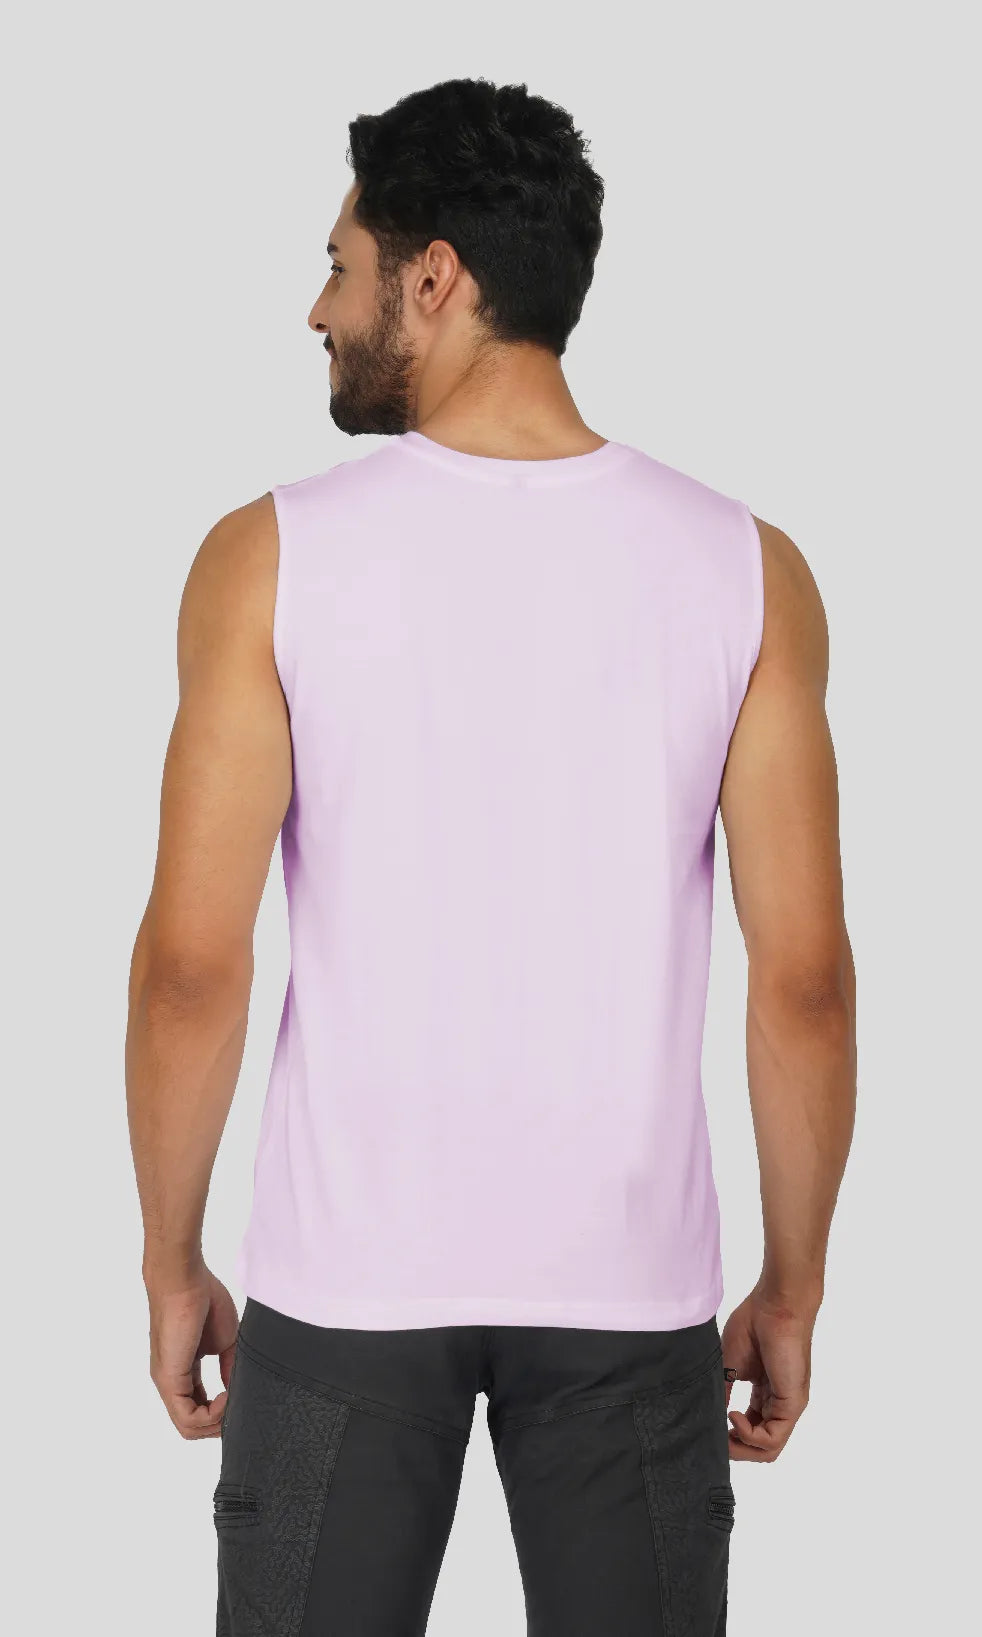 Mebadass Cotton Men's Sleeveless Regular Size Vests - Lavender